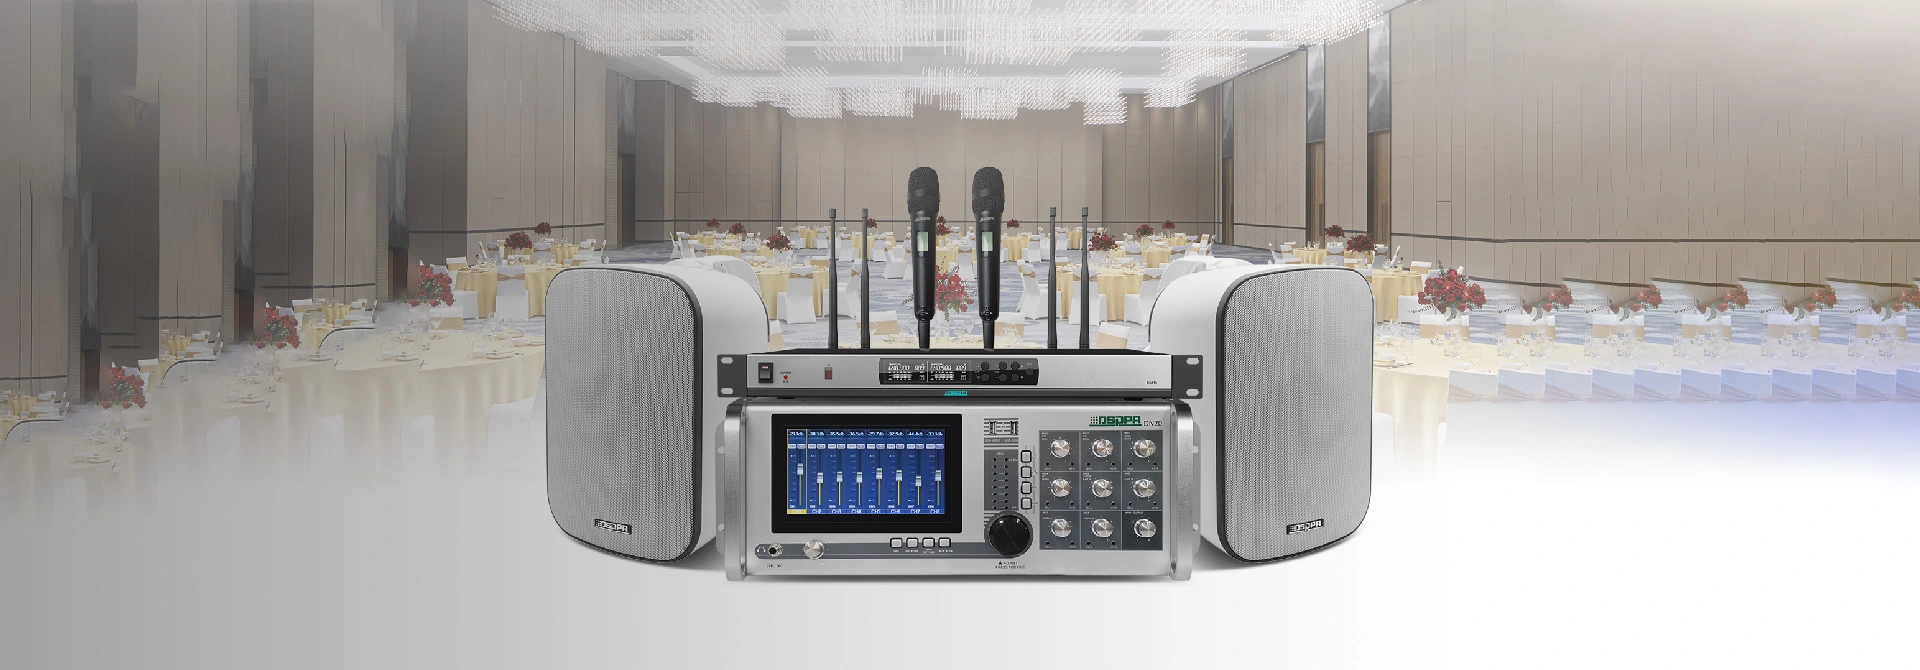 Professional Sound System Solution para sa Banquet Halls